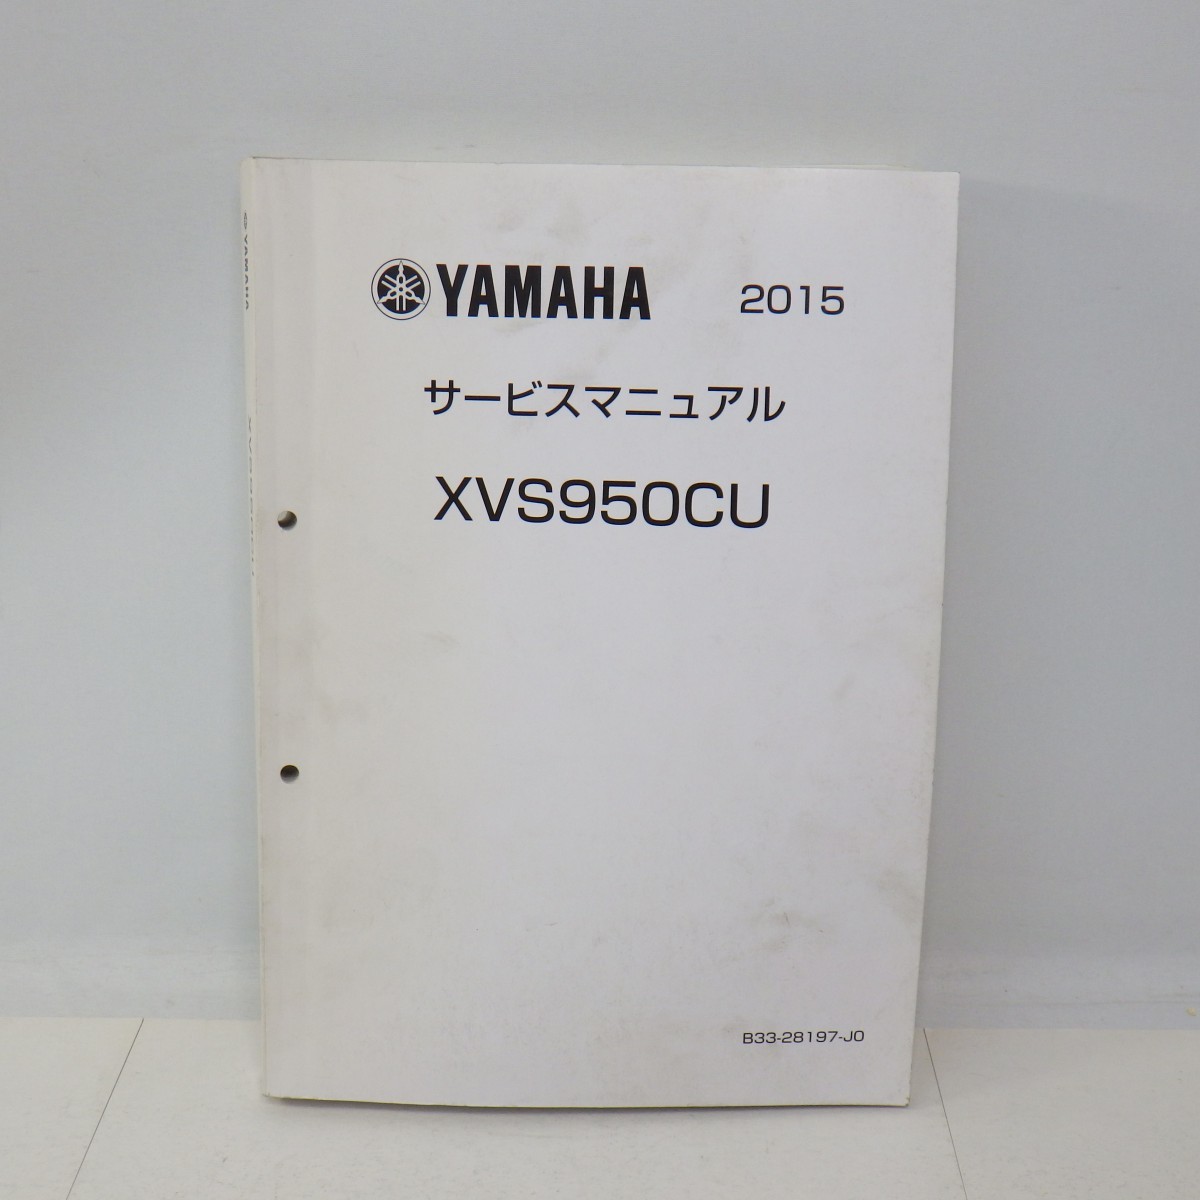  Yamaha [XVS950CU/BOLT] service manual 2015 year /B33-28197-J0/ wiring diagram attaching /YAMAHA bolt bike motorcycle P